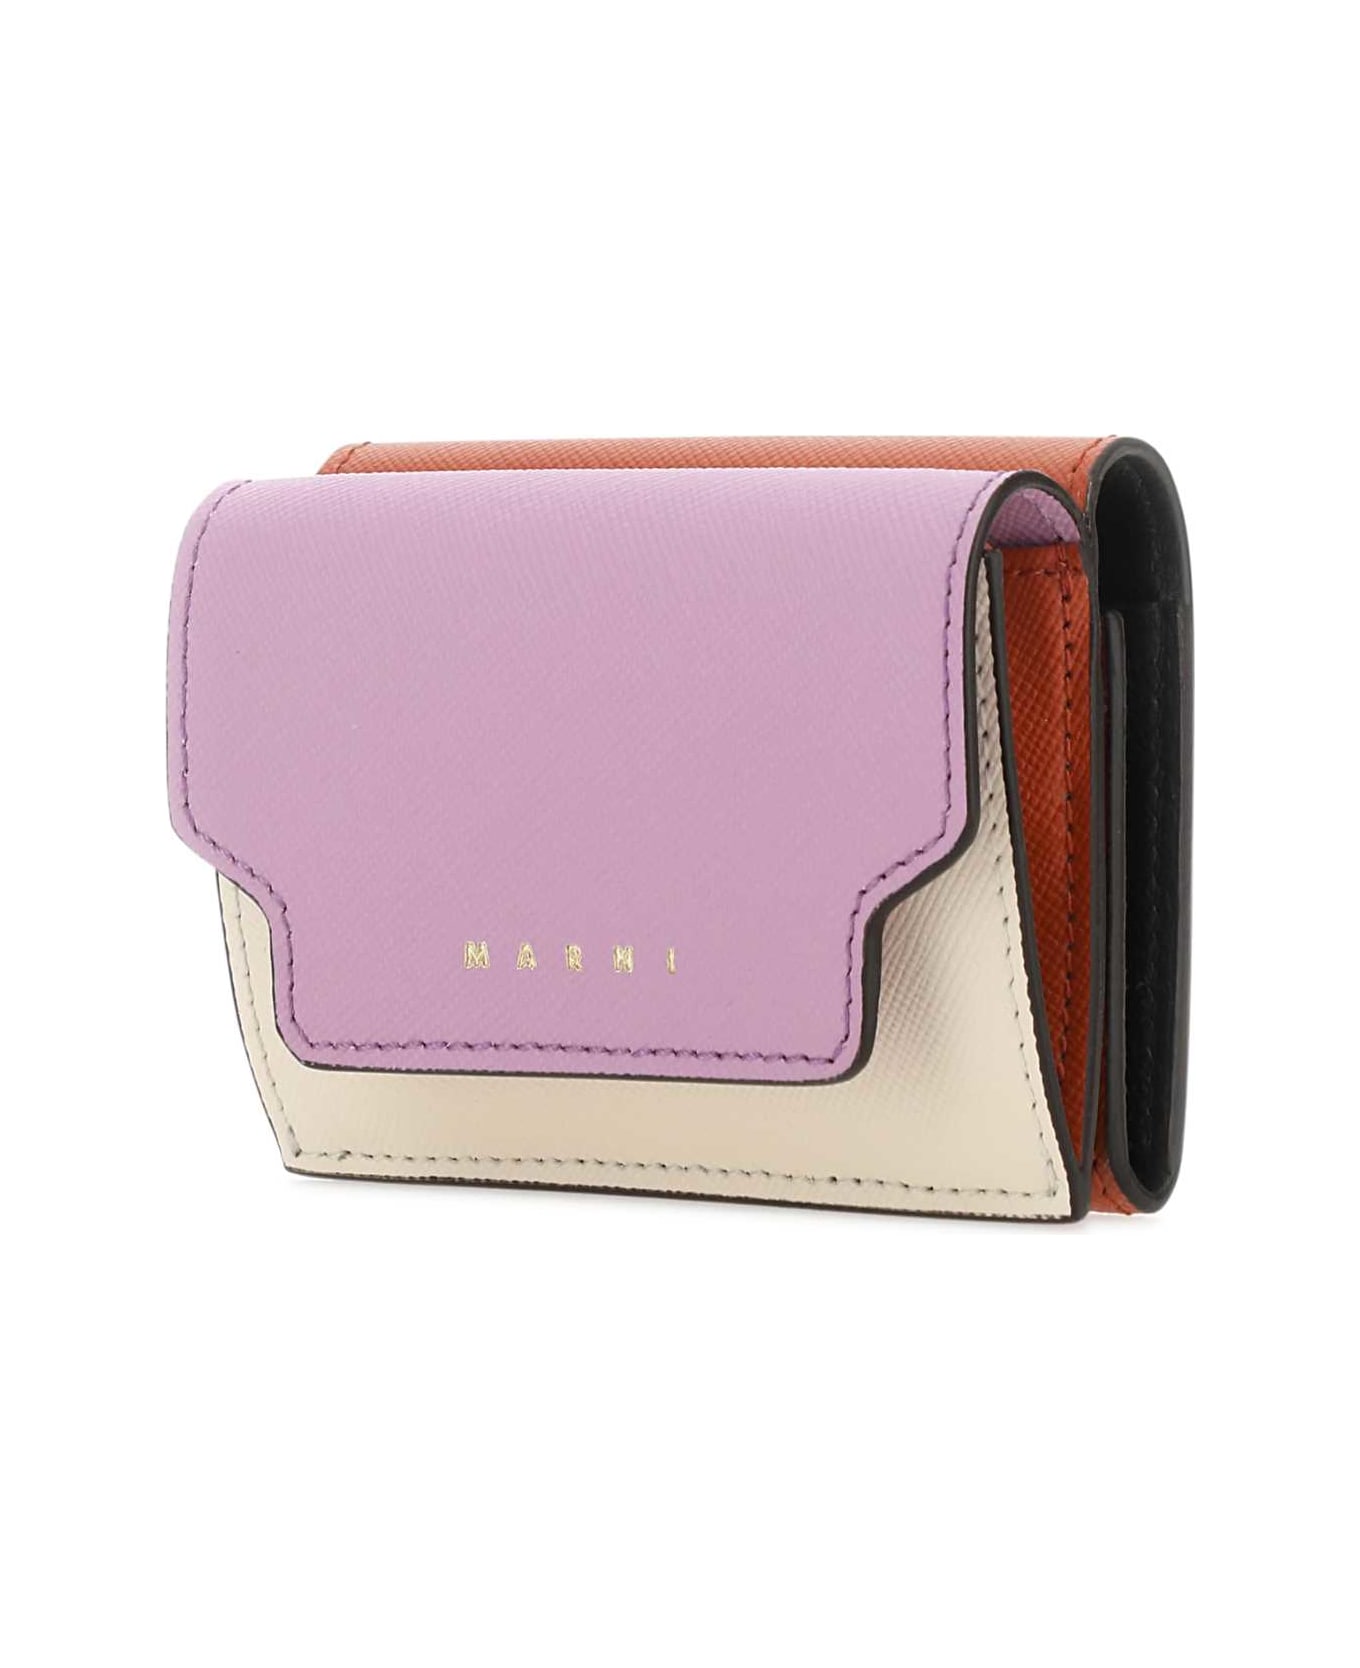 Marni Multicolor Leather Wallet - TALCLIGHTLILATABASCO 財布